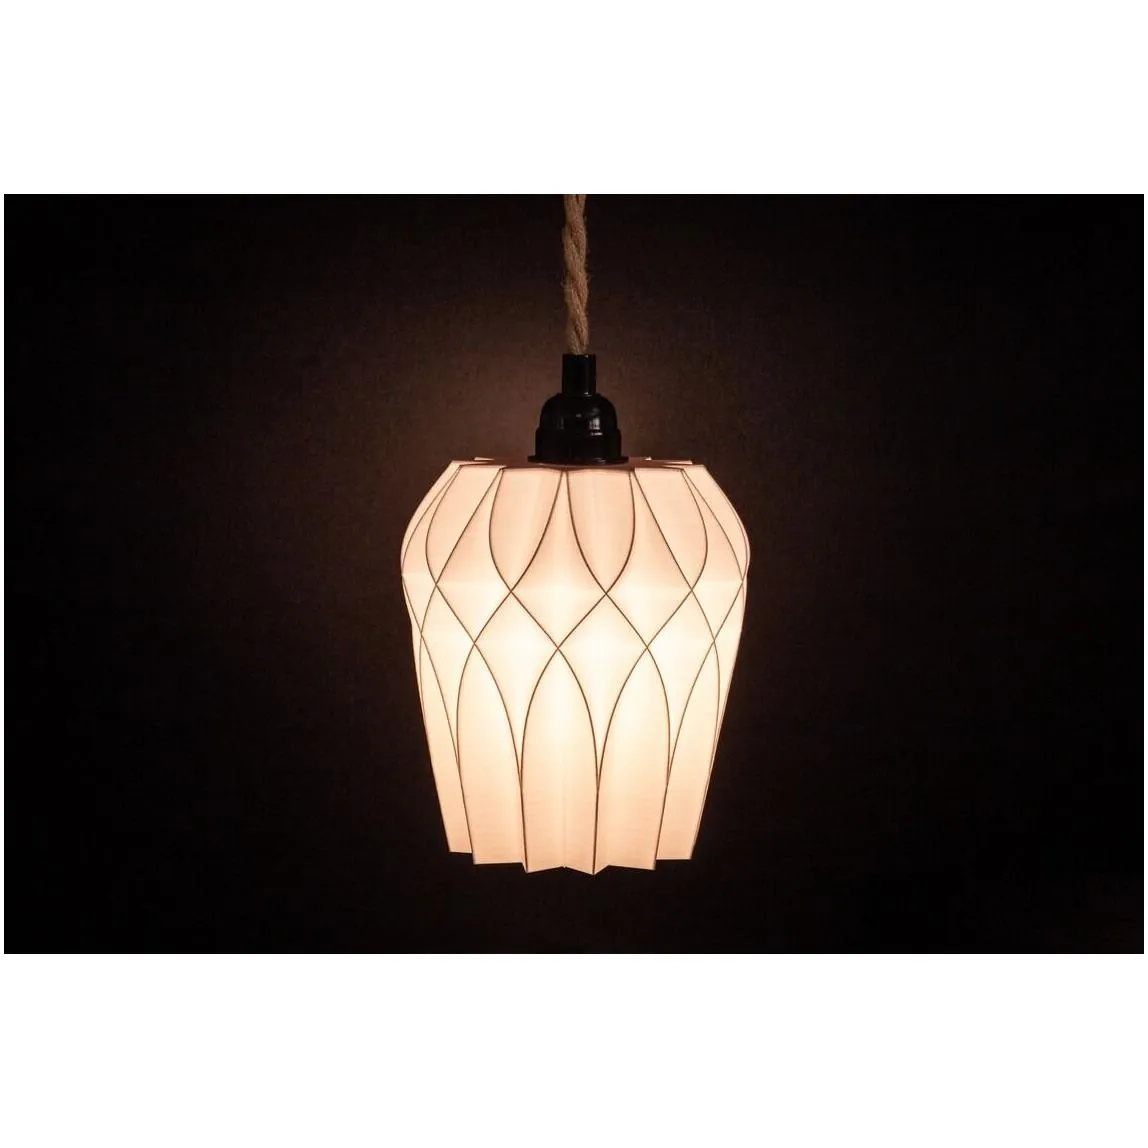 Pendant Lamps Prism Pendant Hanging Lamp L Plug In Drop Delivery Lights Lighting Indoor Lighting Ot4Mx